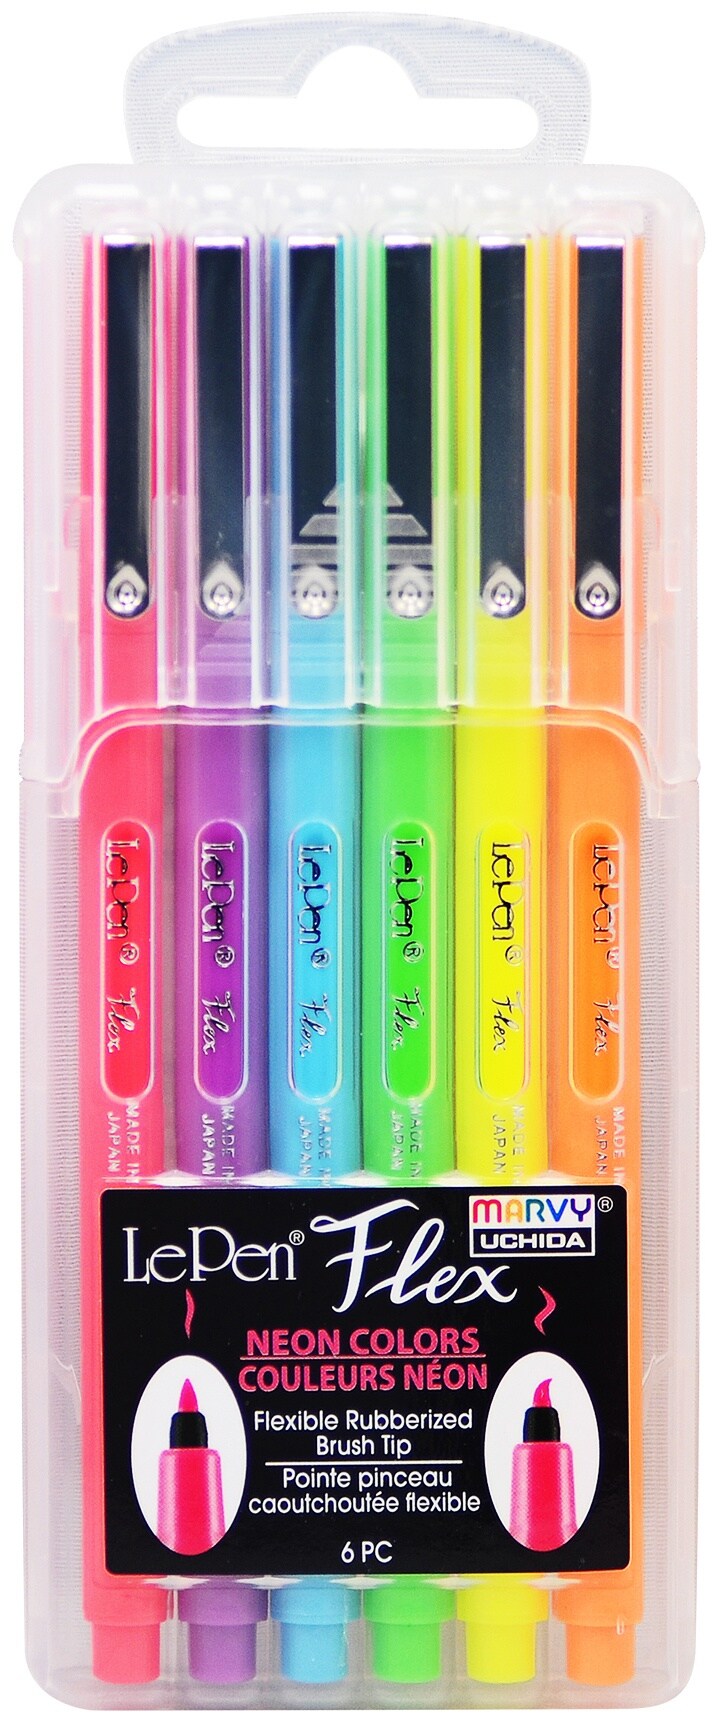 Uchida LePen Flex Neon 6 Colors